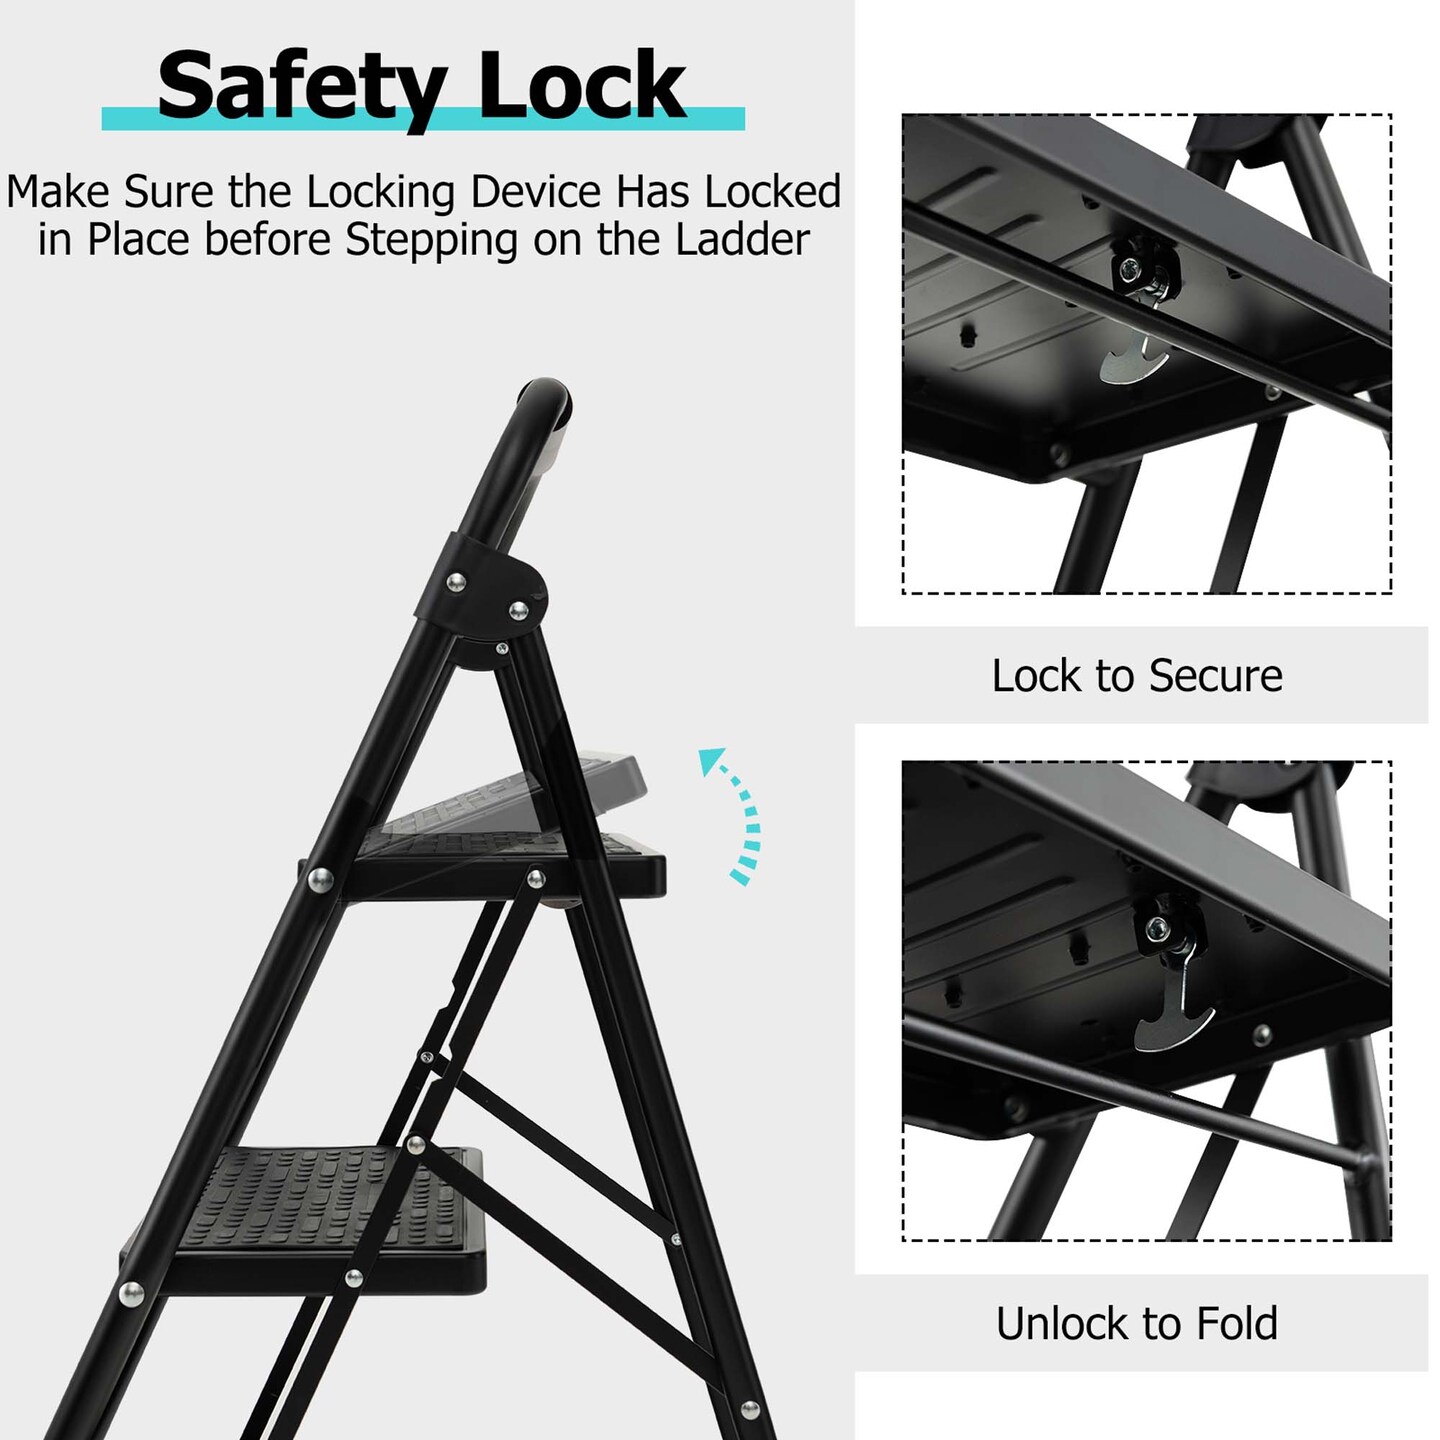 Costway 3 Step Ladder Folding Step Stool 330lbs Capacity w/ Anti-Slip Pedal &#x26; Handle